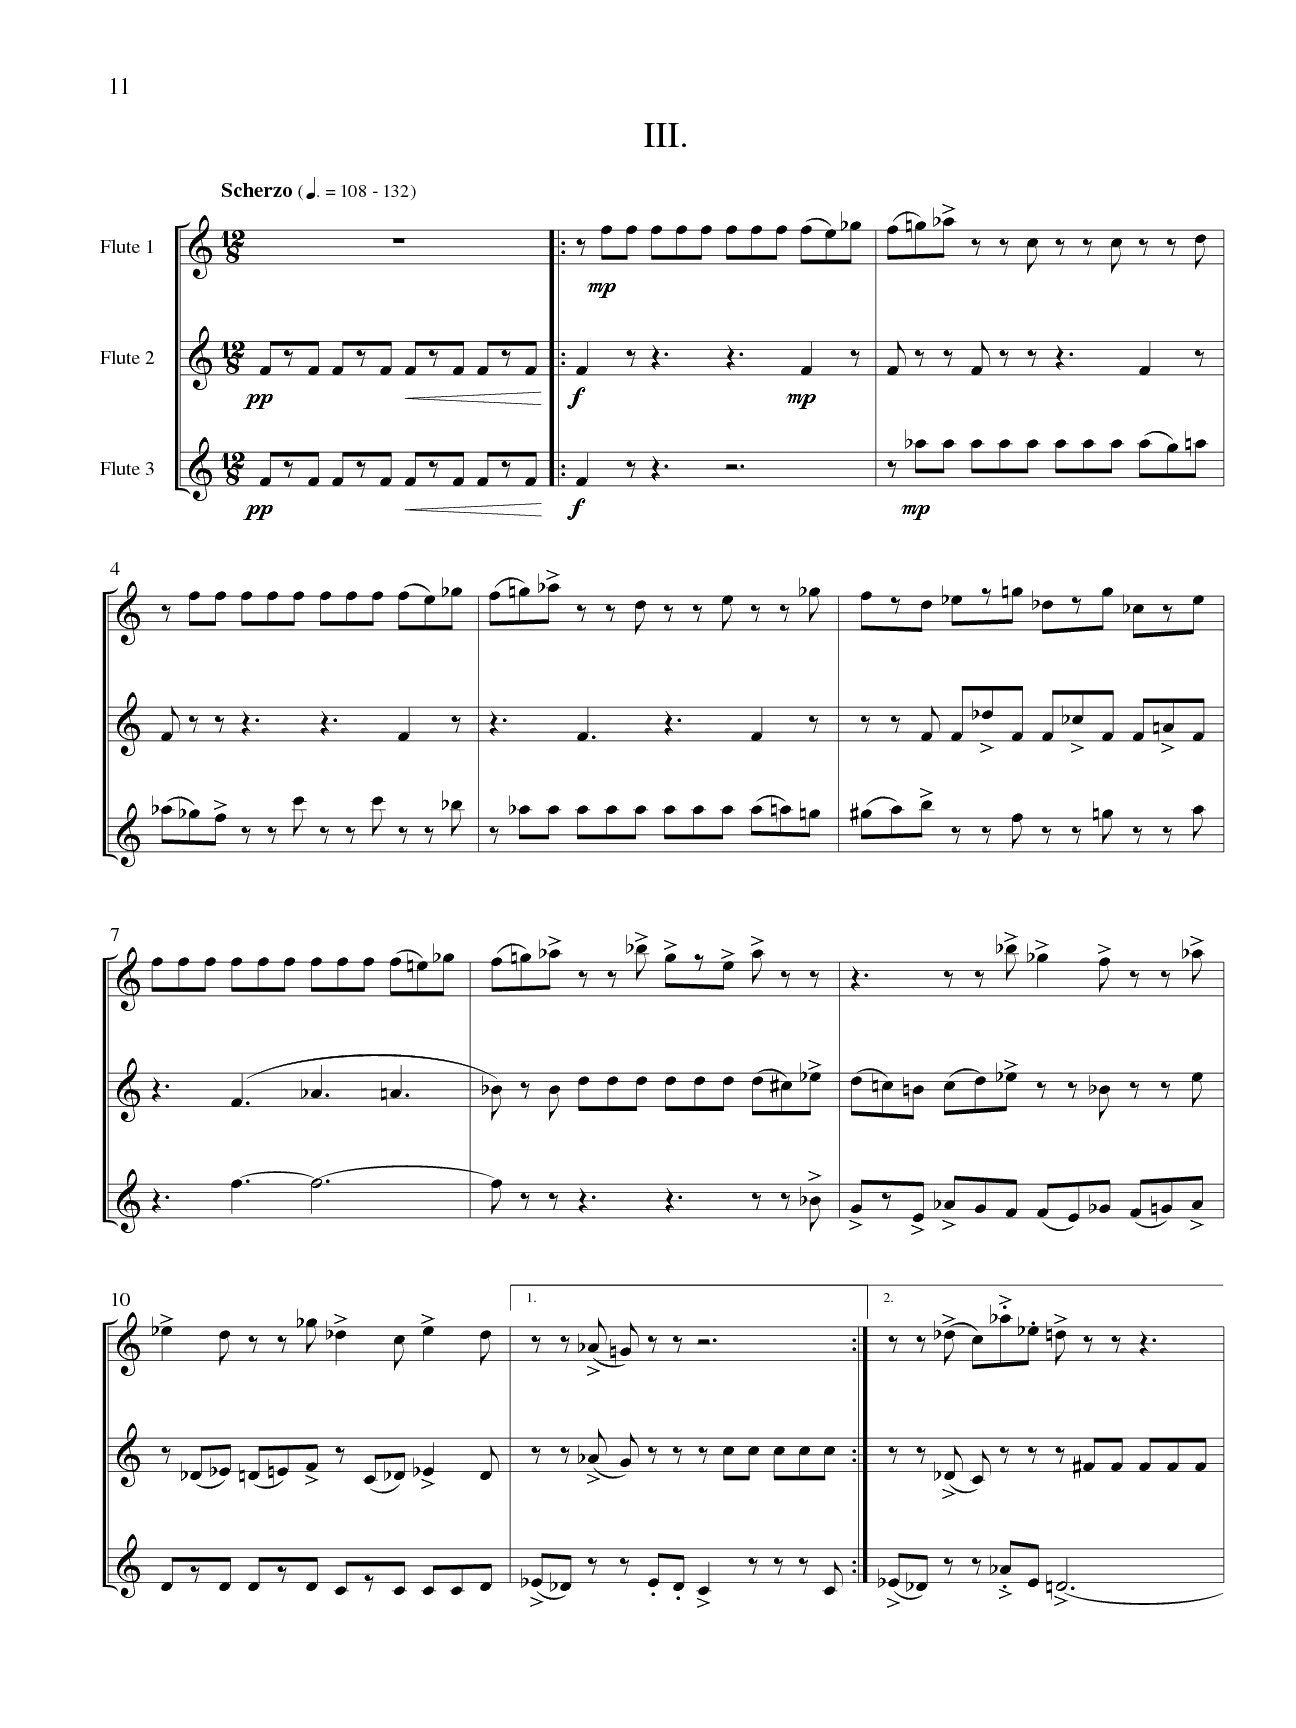 La Montaine, John - Trio Sonata for 3 Flutes or 30 Flutes or 300 Flutes